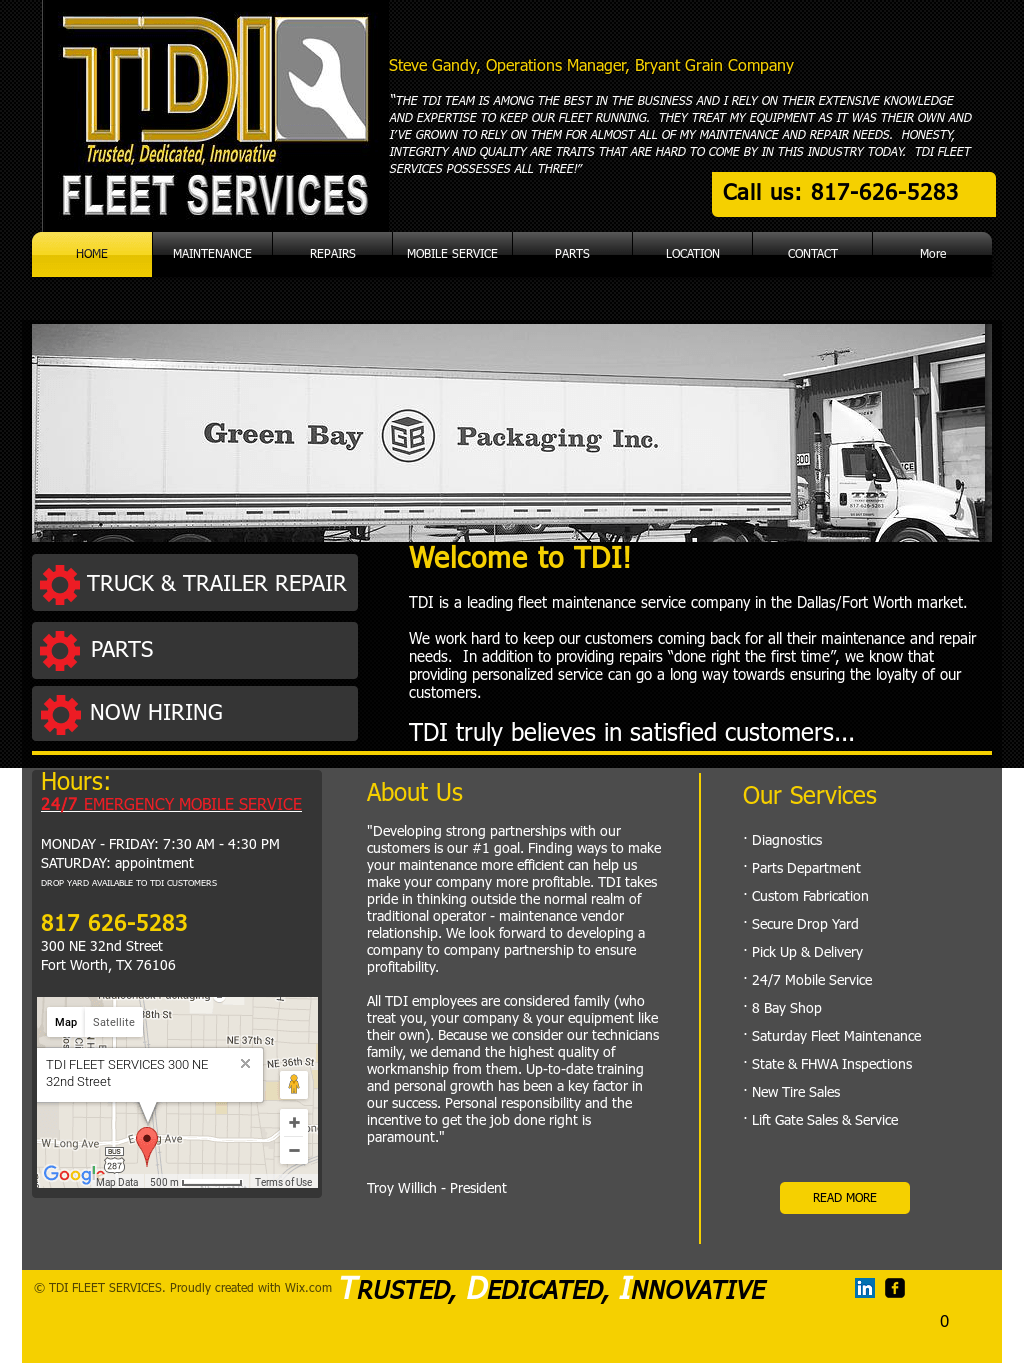 TDI Fleet Logo - Tdi Fleet Services Competitors, Revenue and Employees